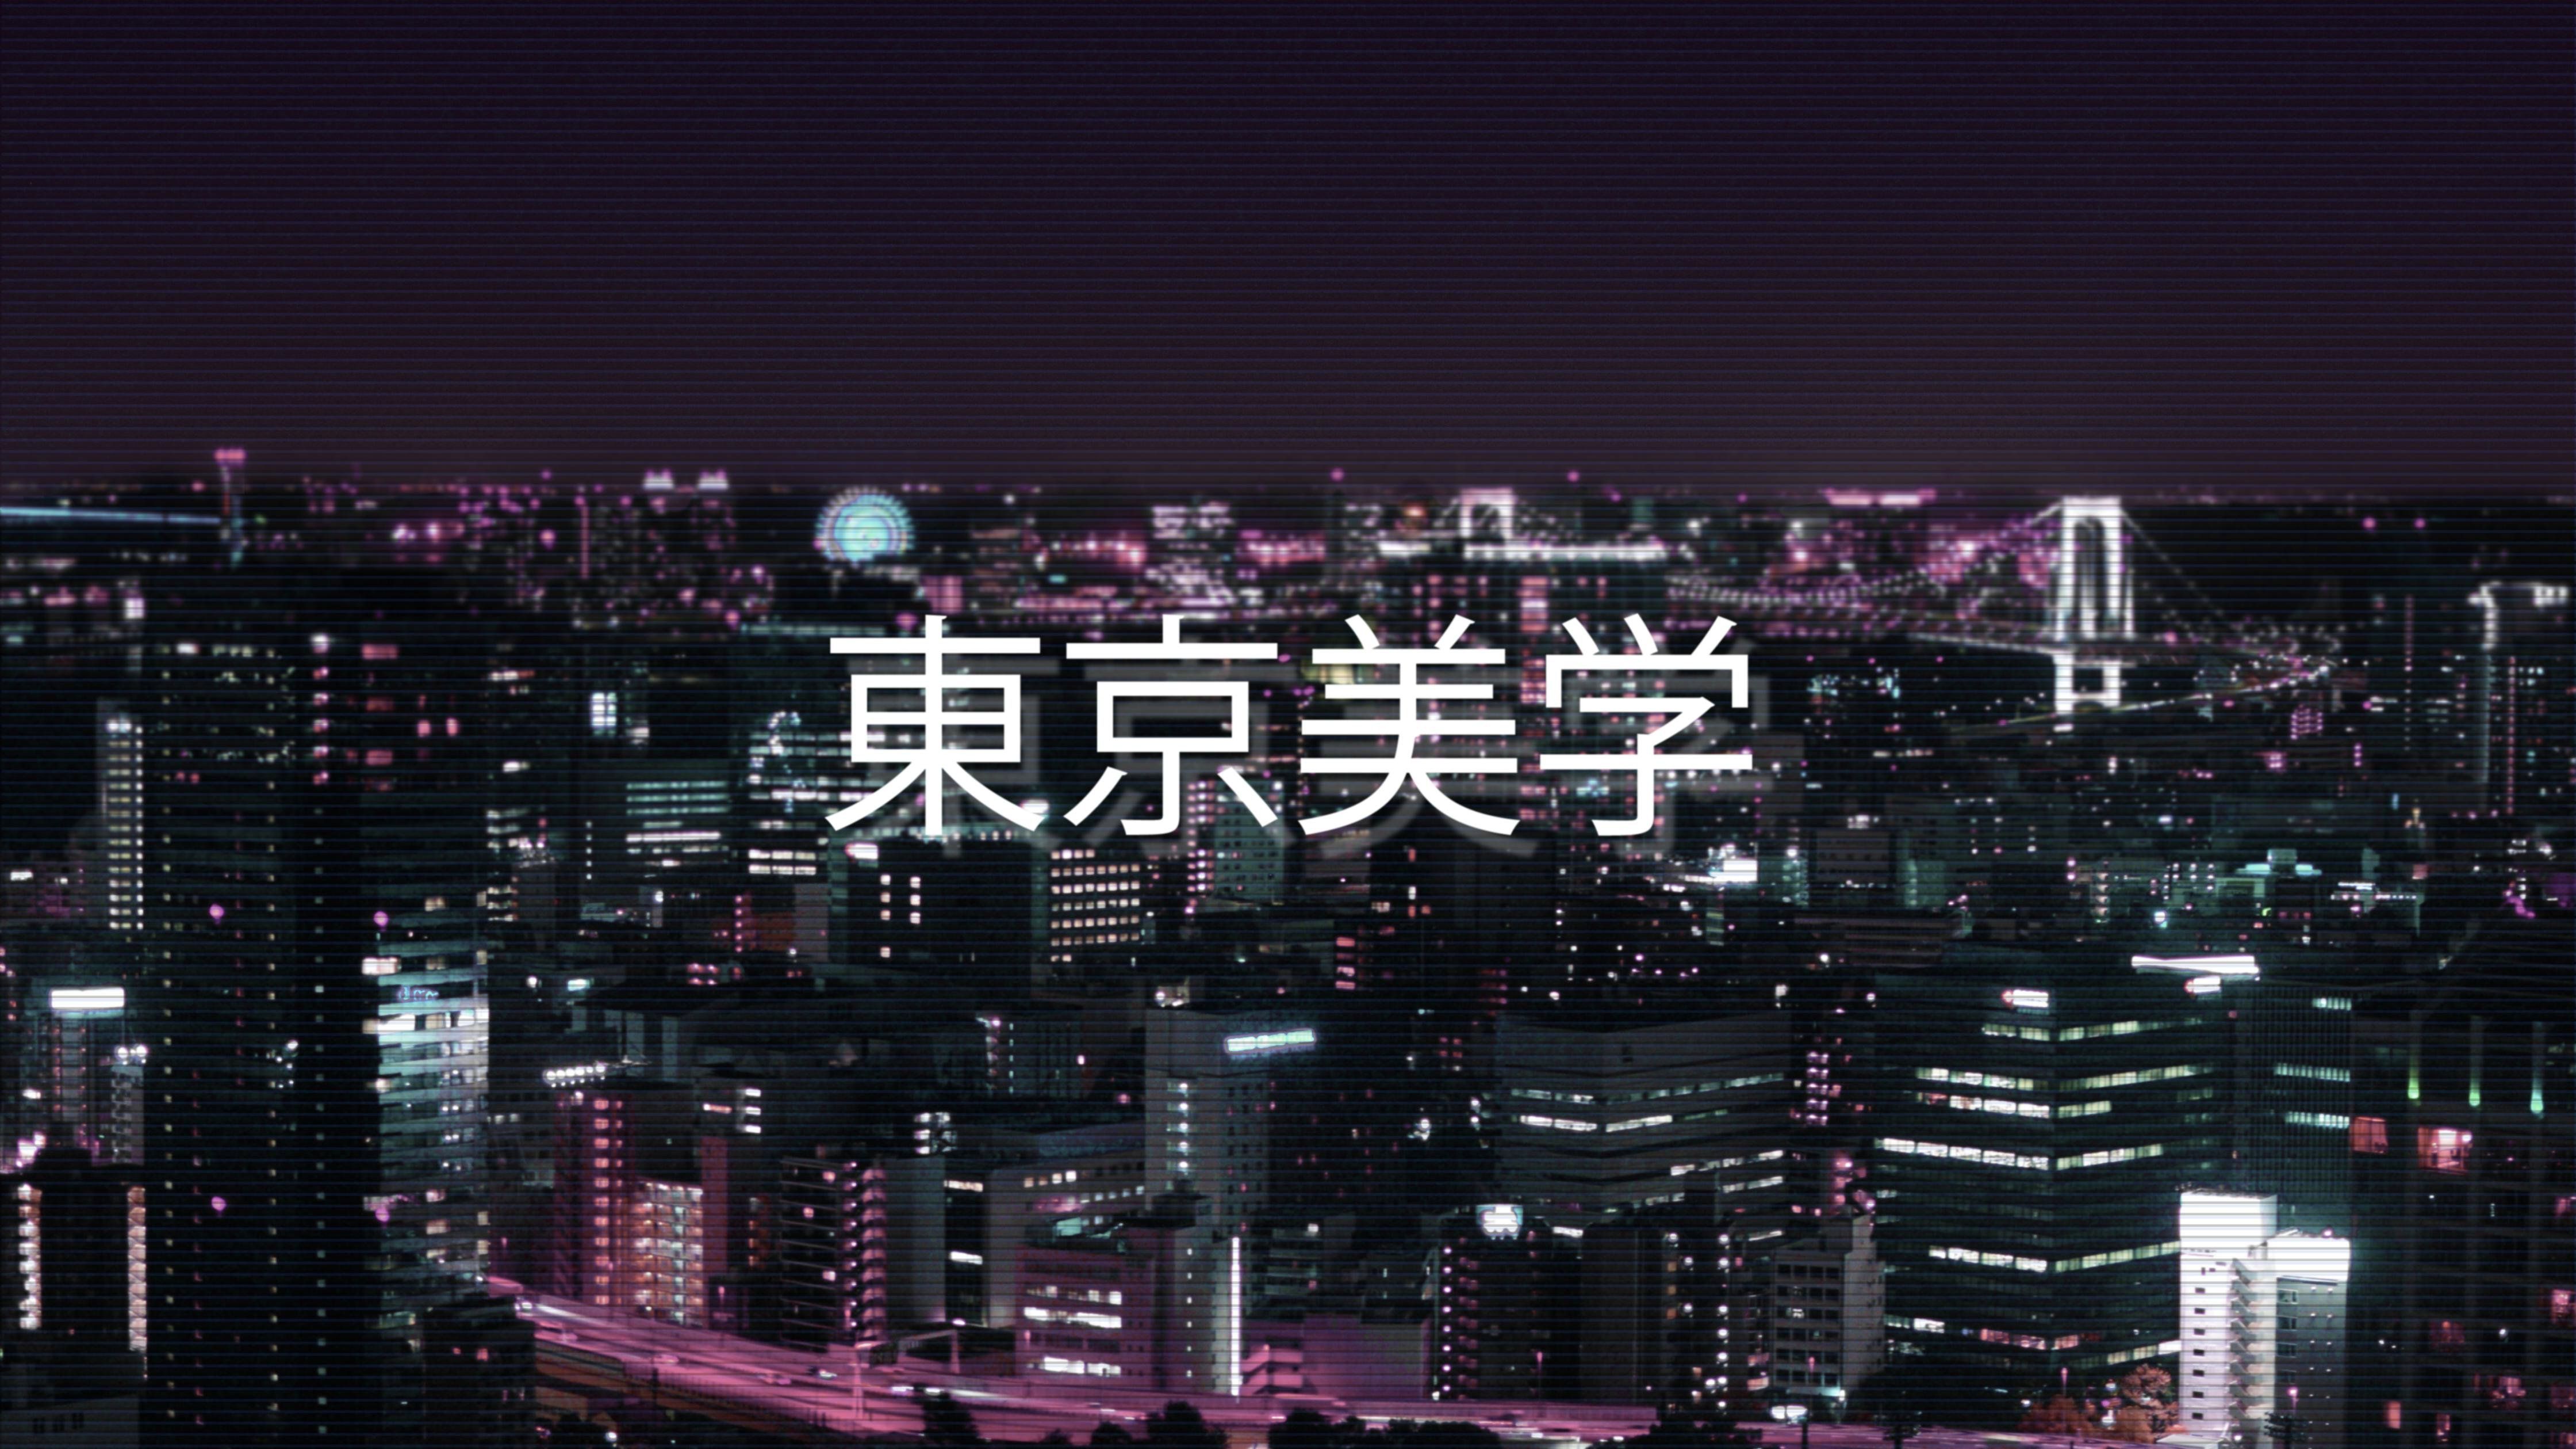 Tokyo 4K wallpaper for your desktop or mobile screen free